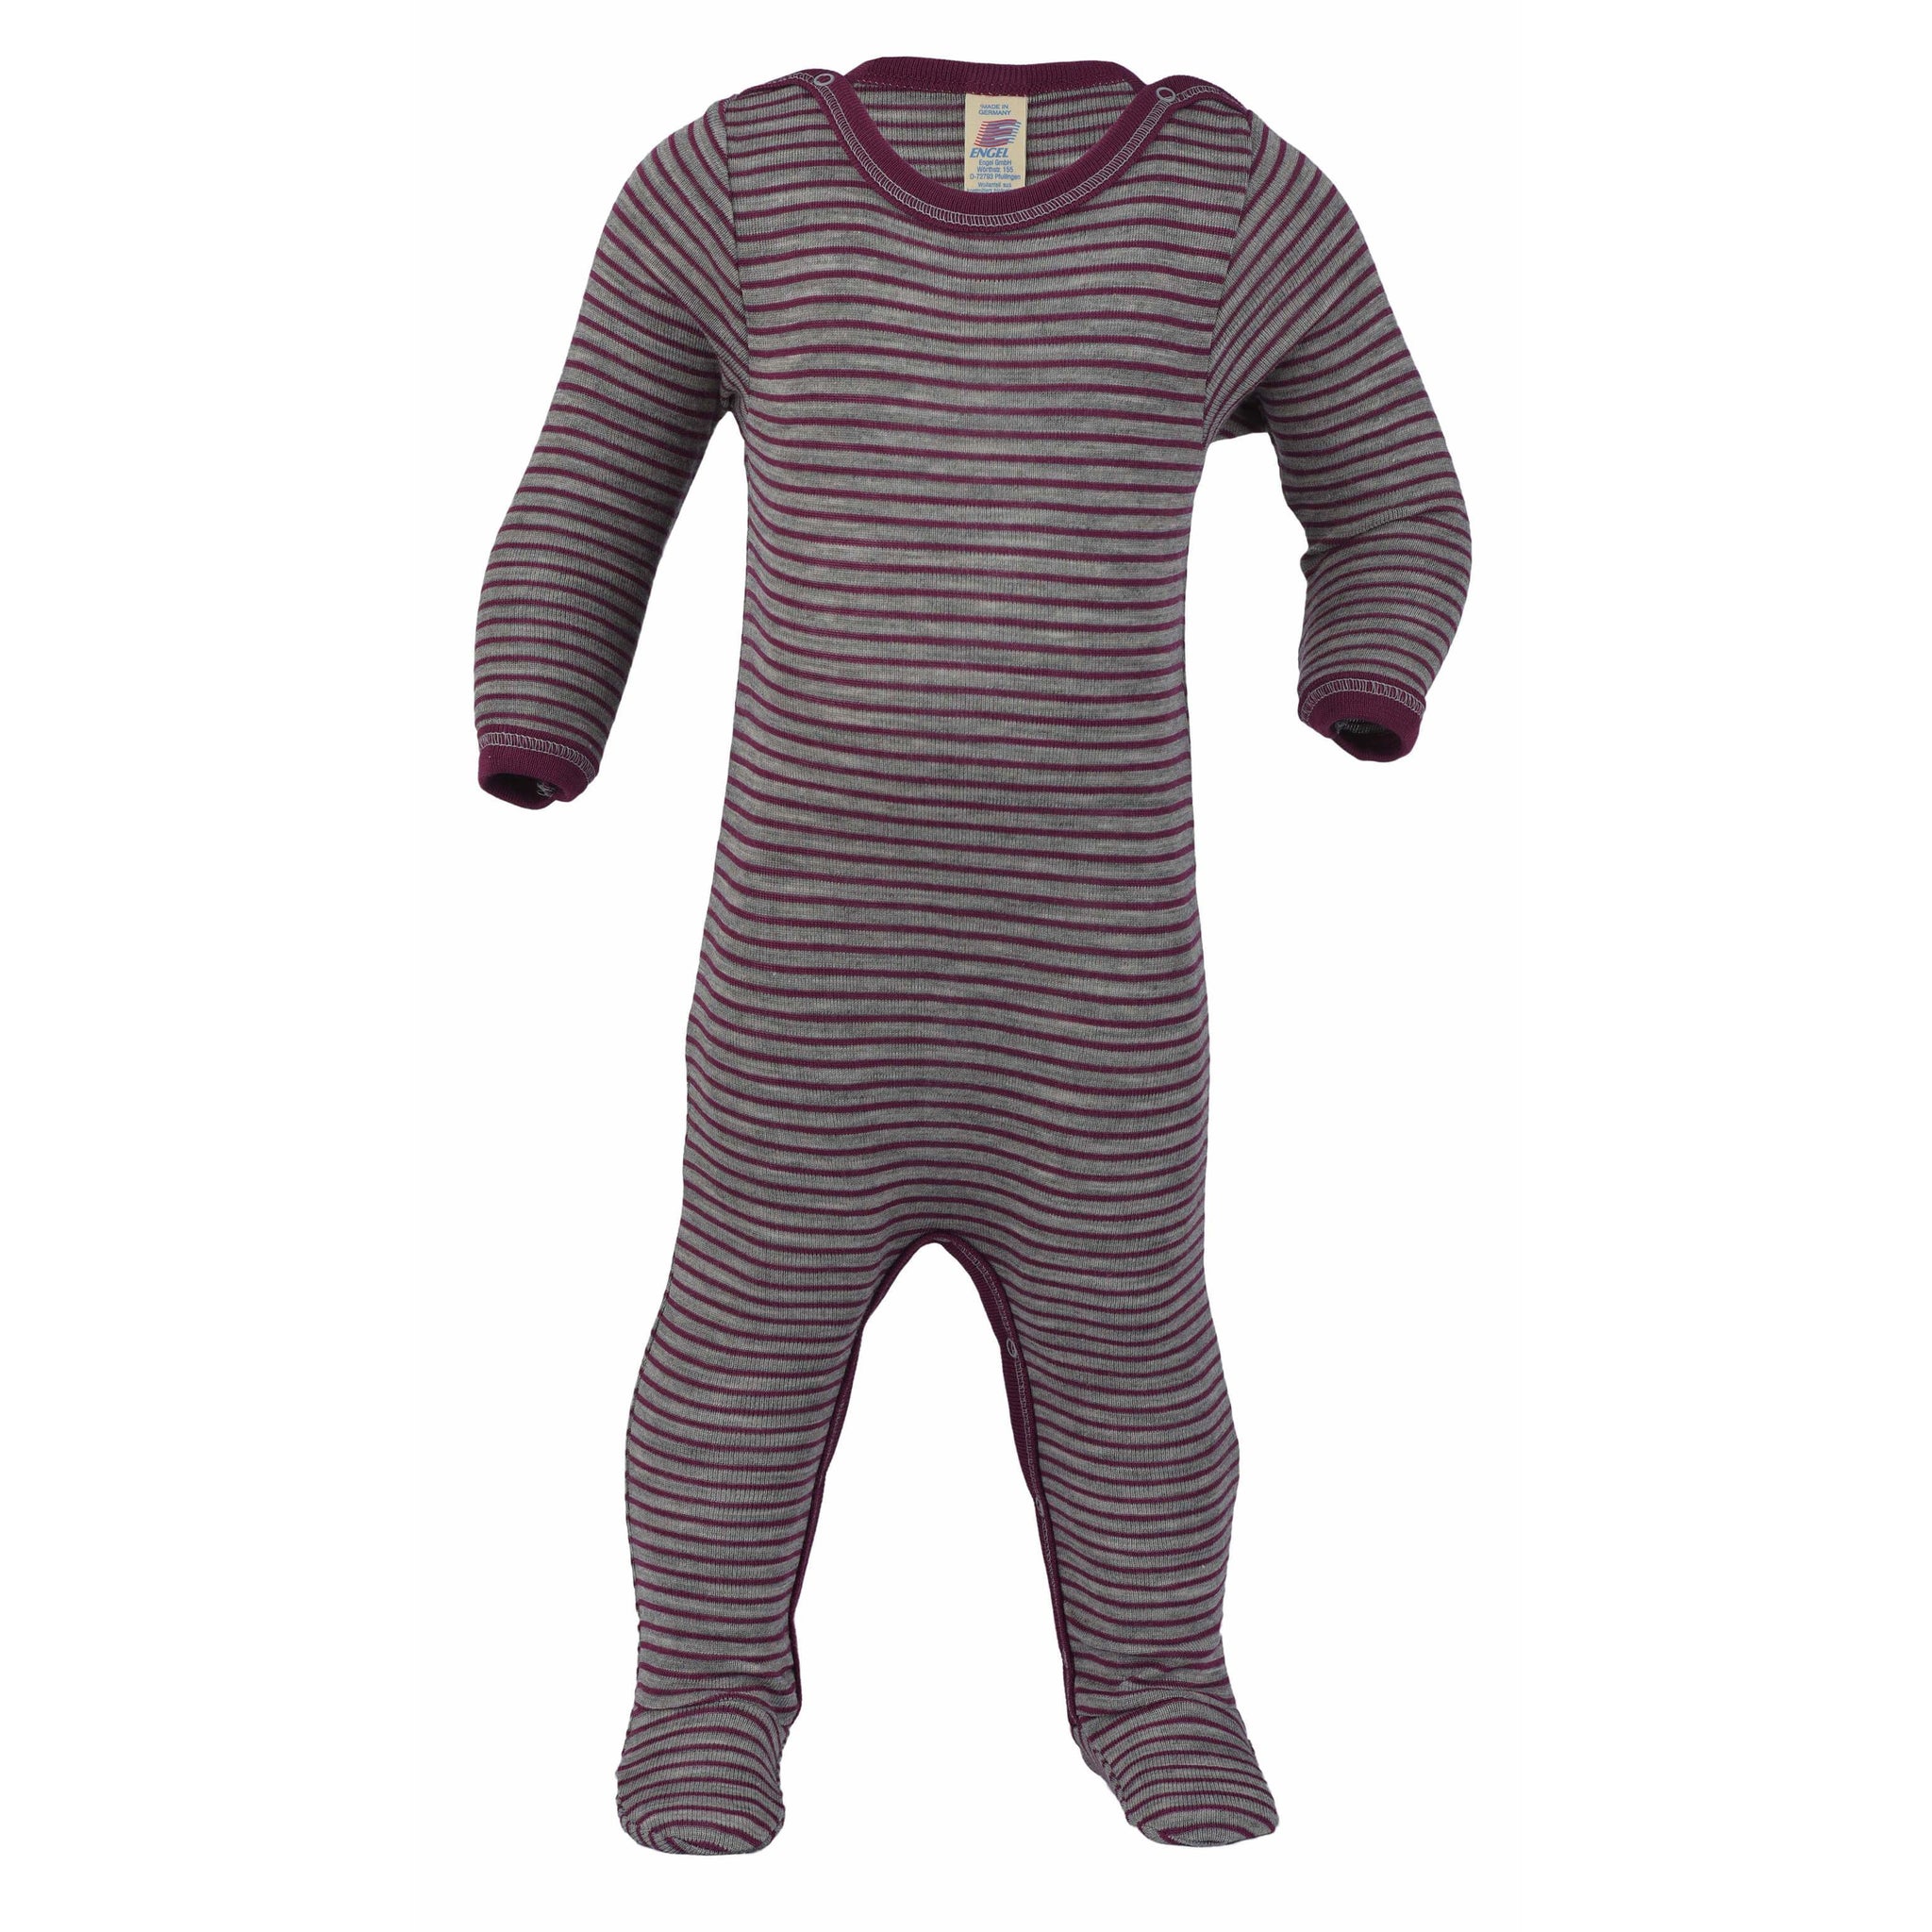 Pijamale intregi pentru bebelusi din lana si matase